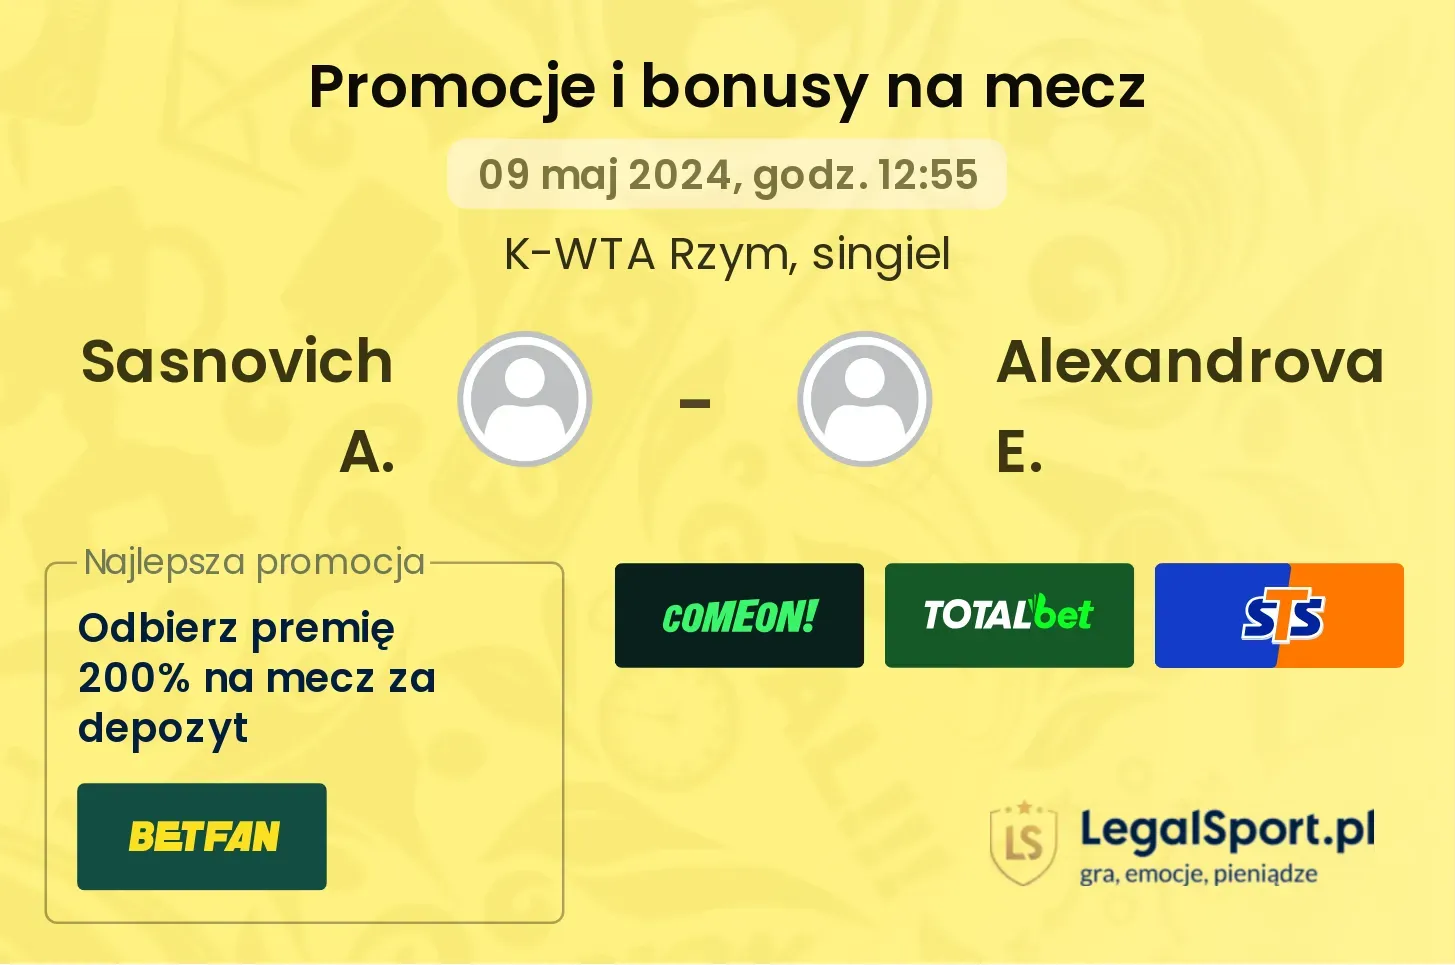 Sasnovich A. - Alexandrova E. promocje bonusy na mecz